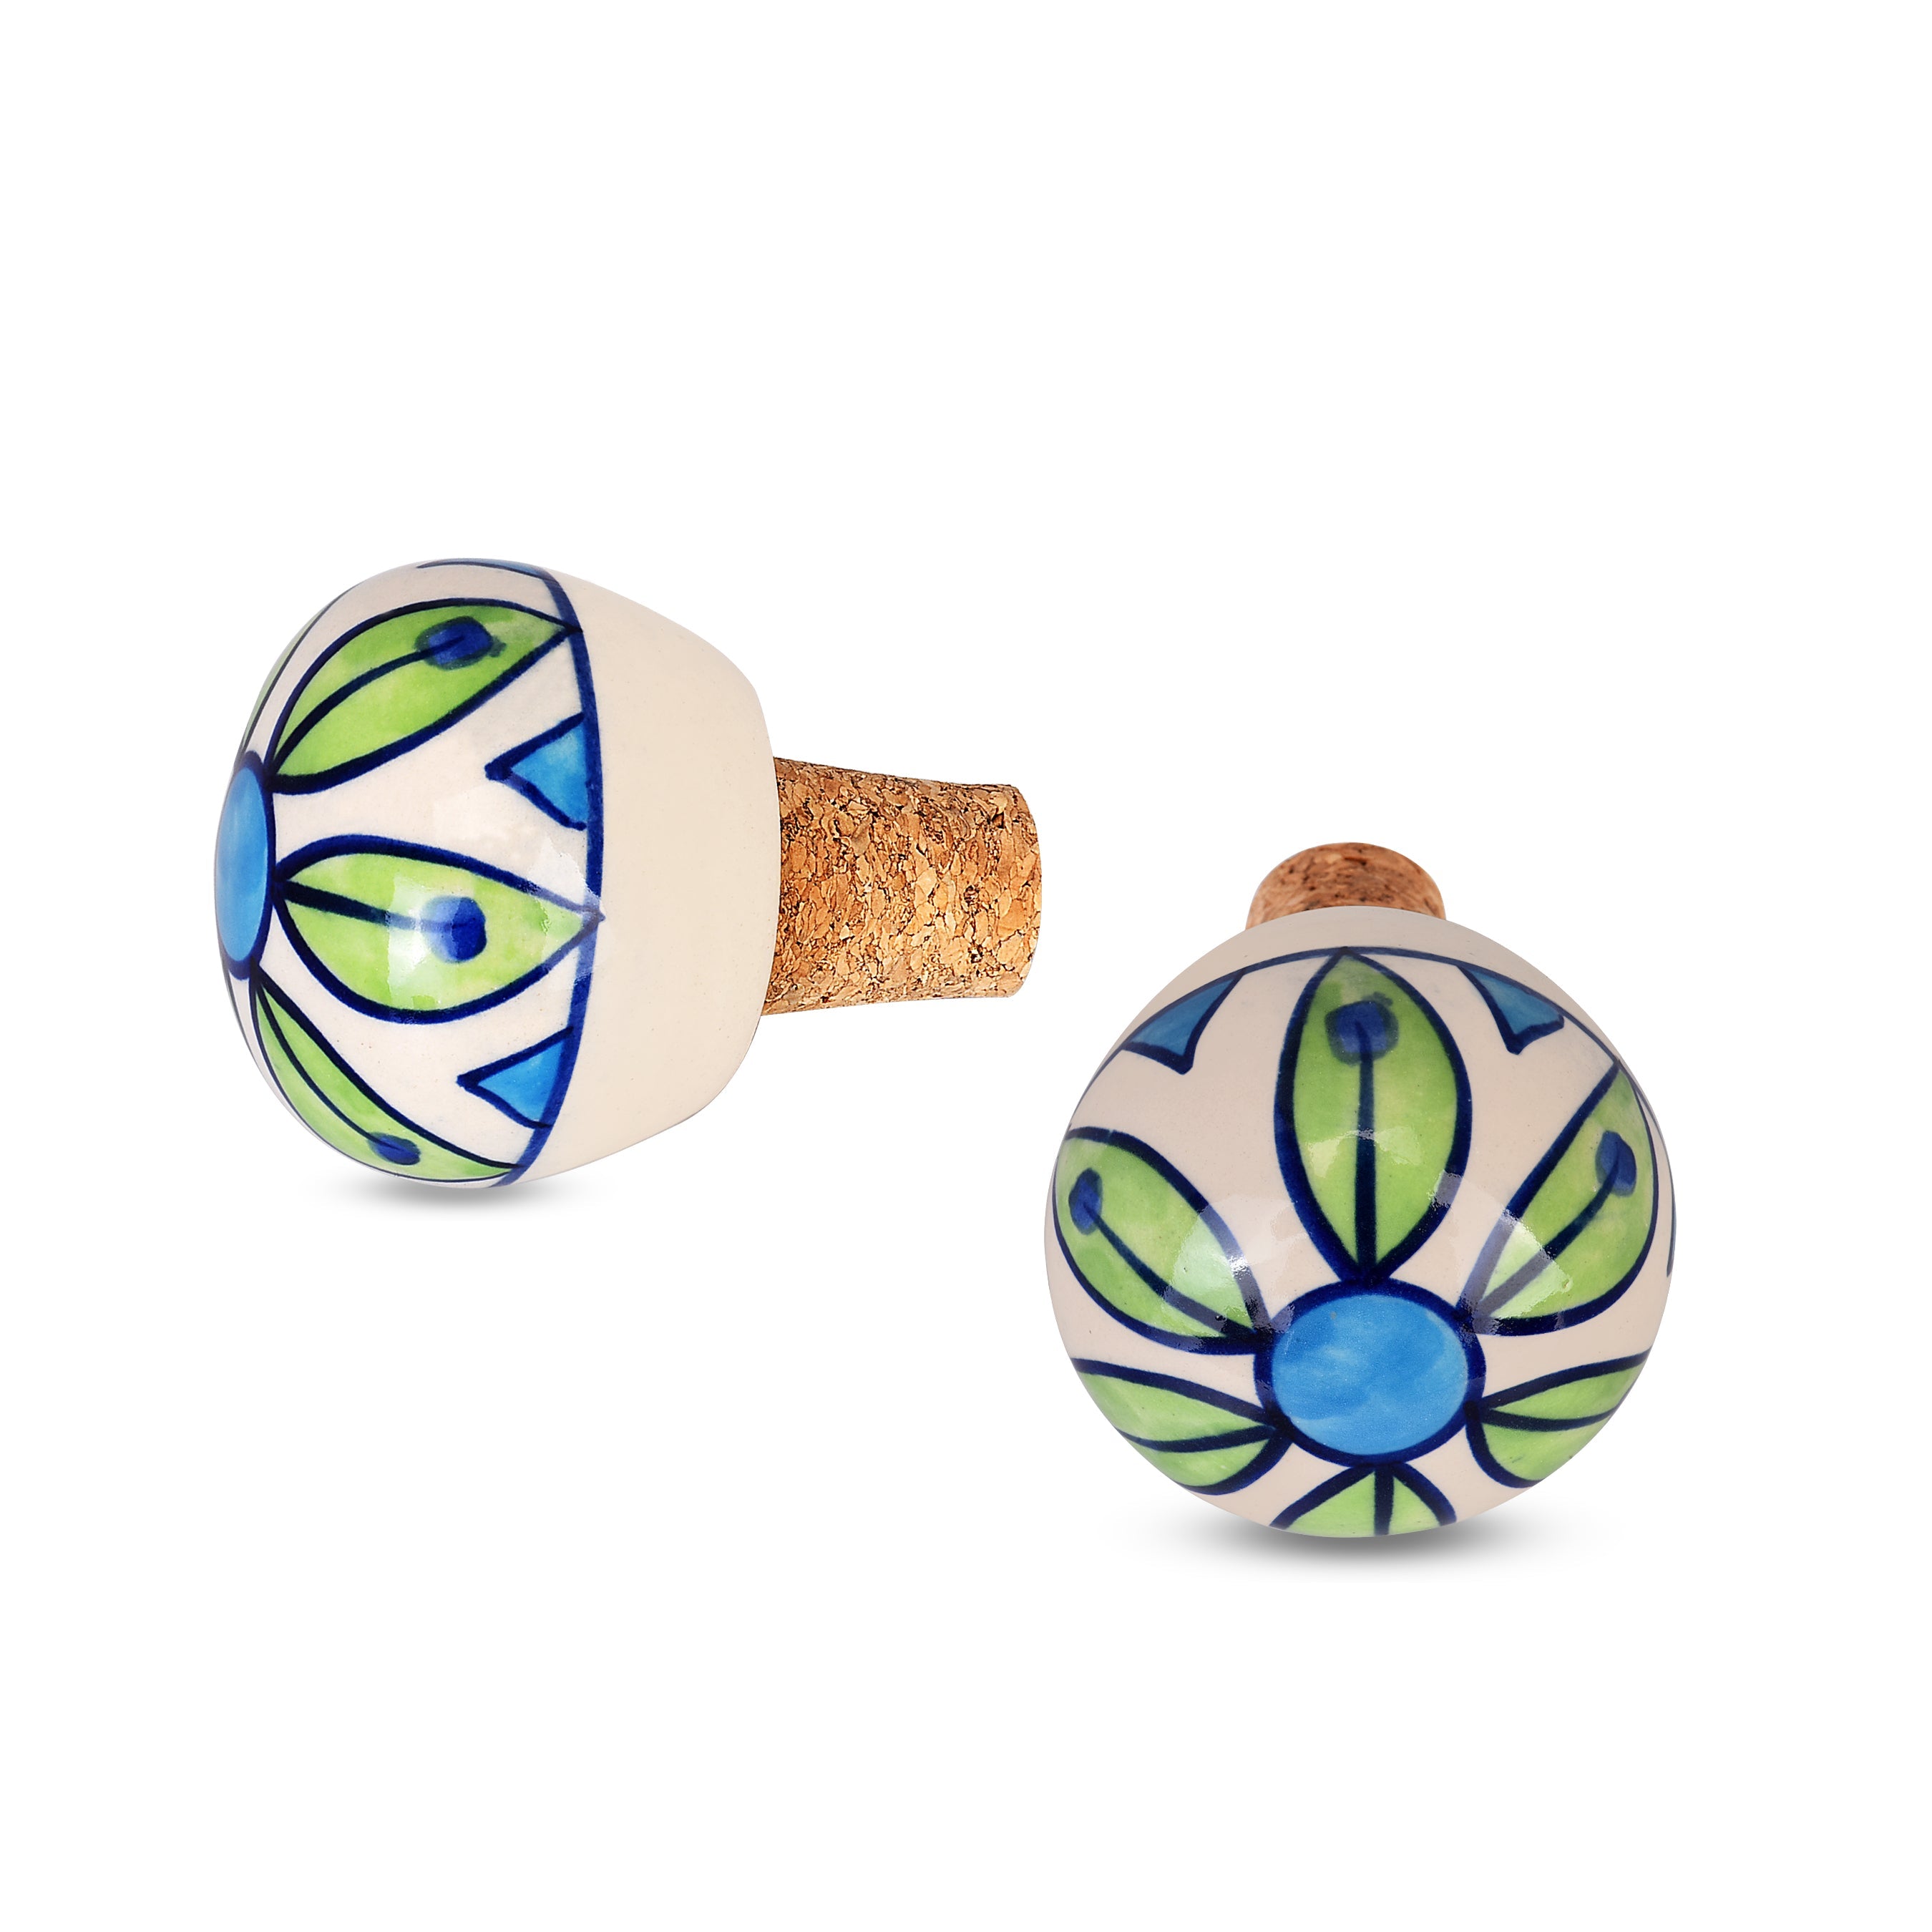 Ceramic Flower Design Wine Bottle Stopper | Shop Online the